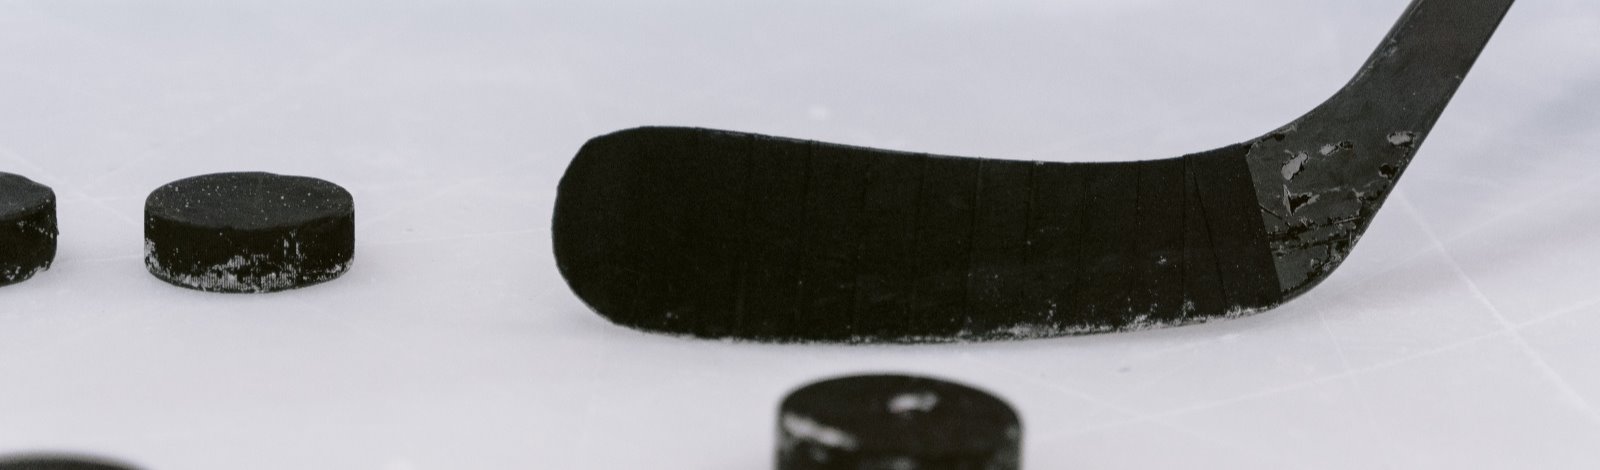 hockey stick with pucks